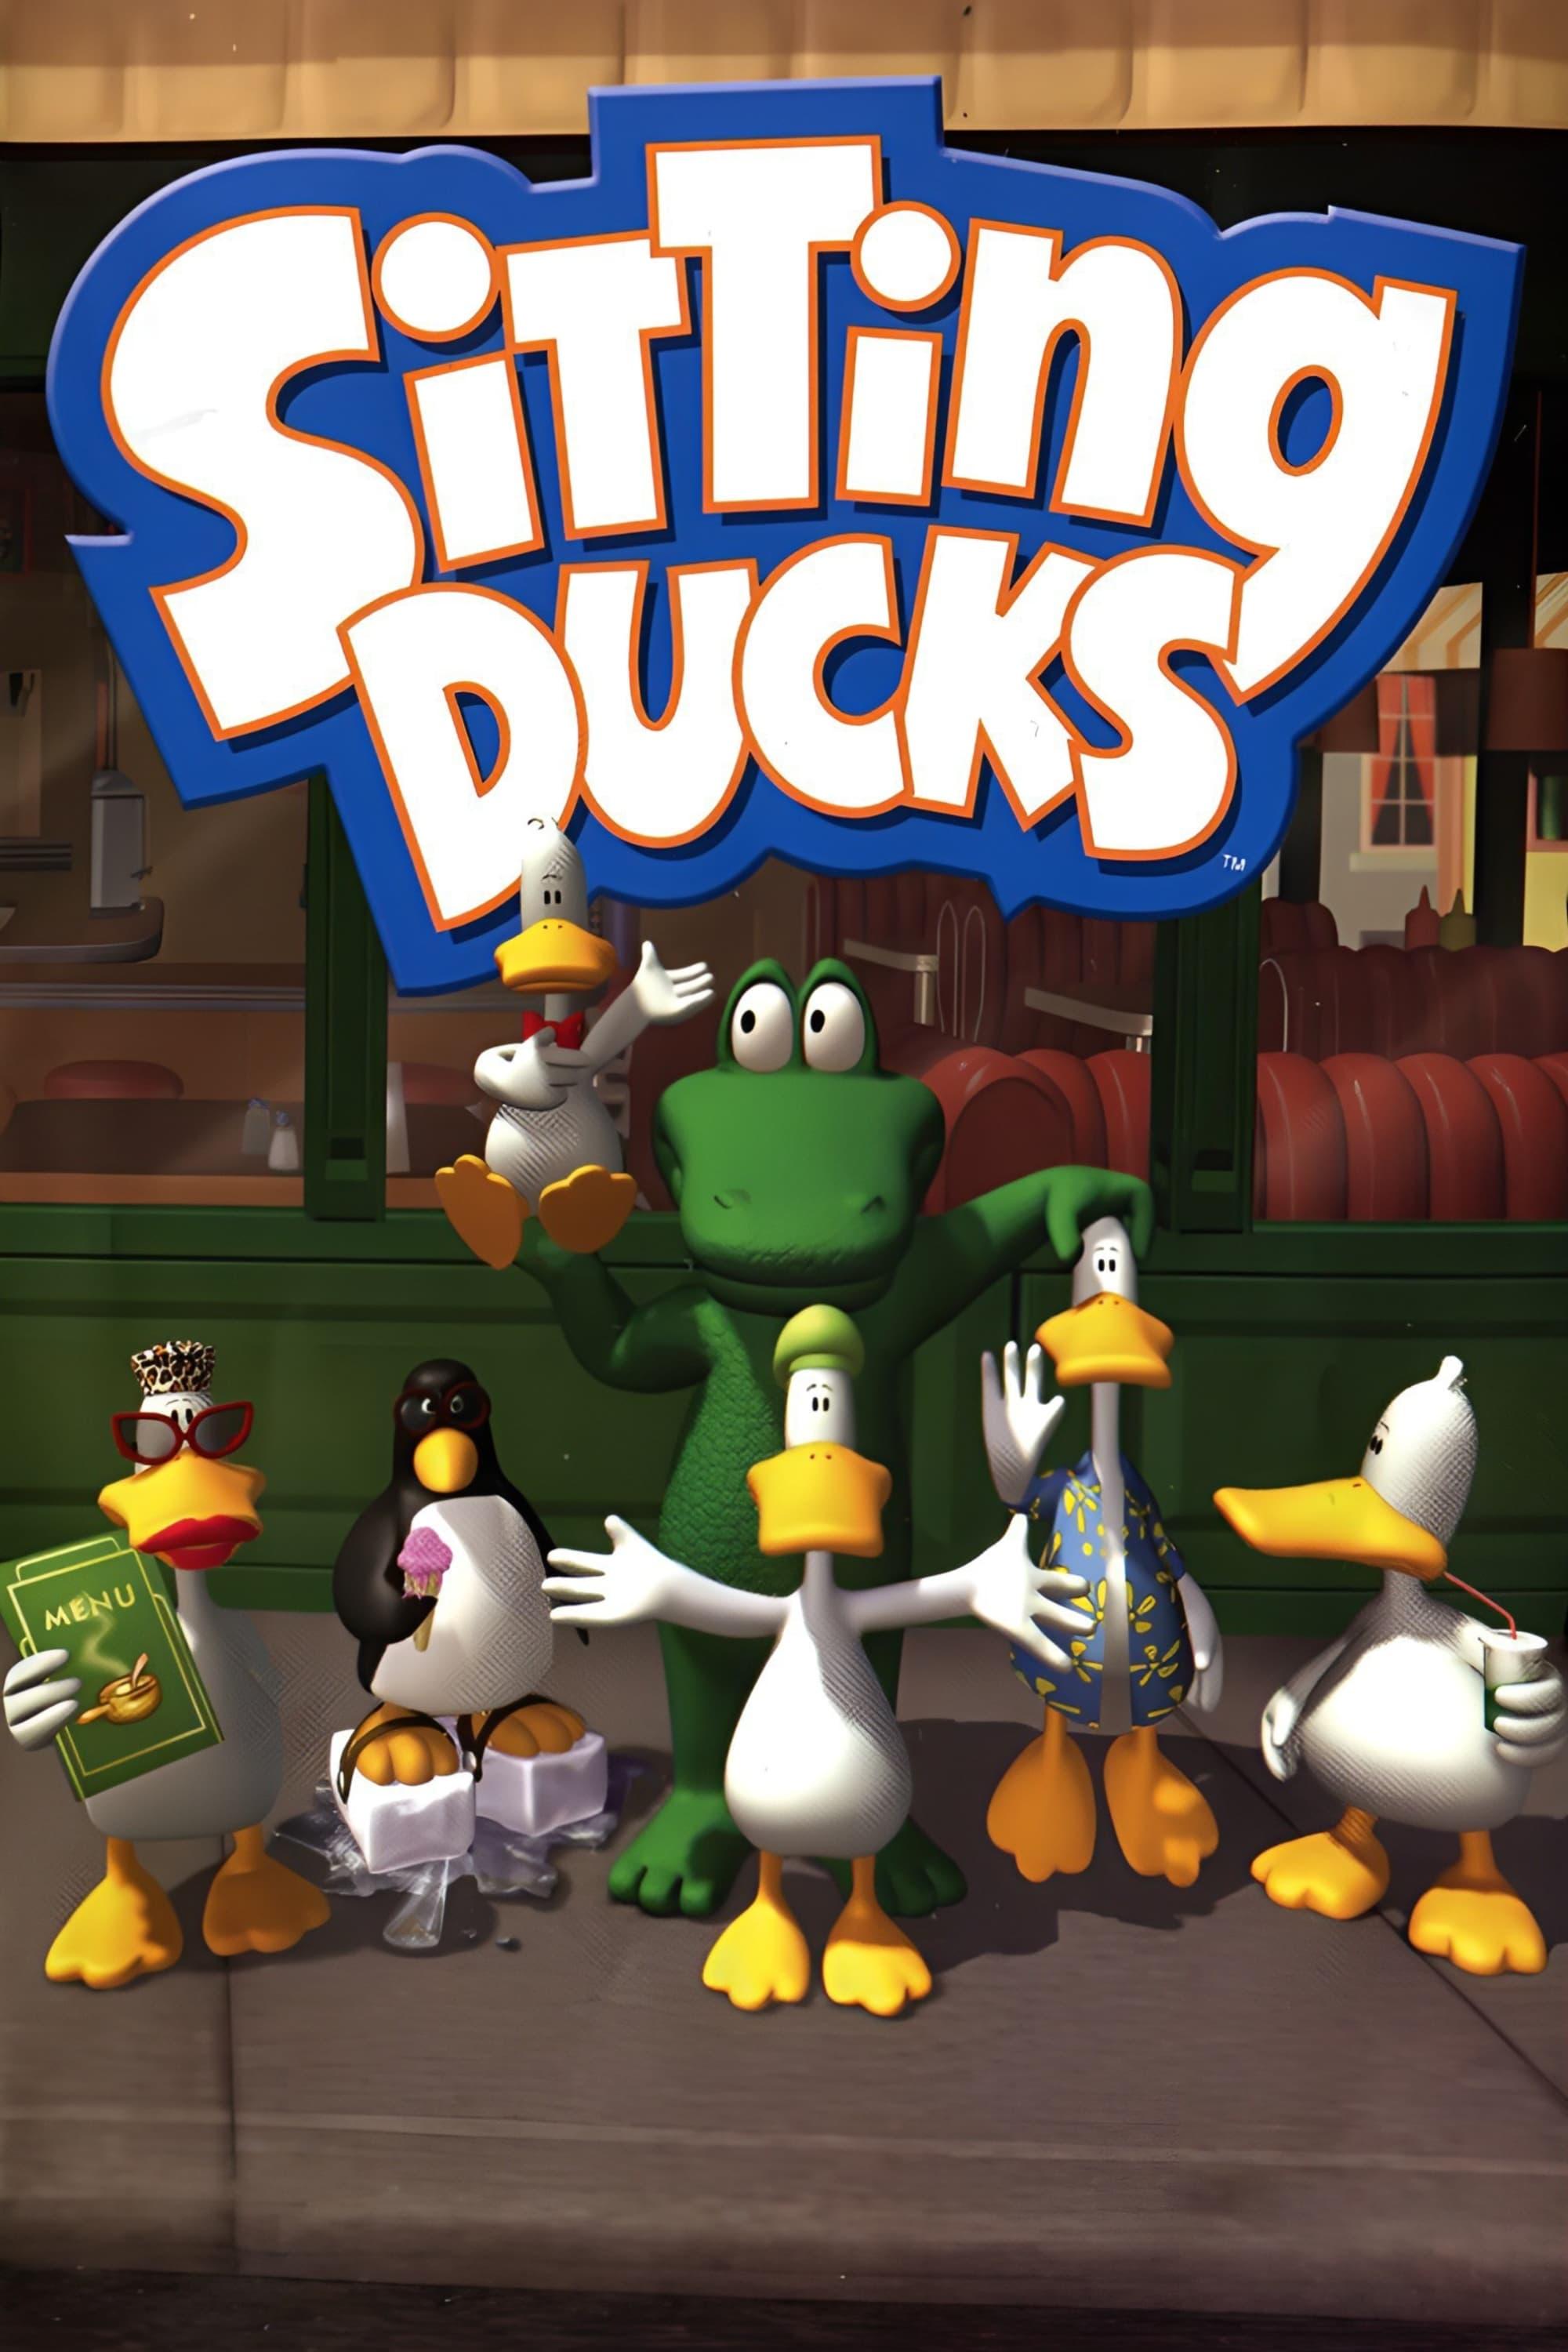 Sitting Ducks poster